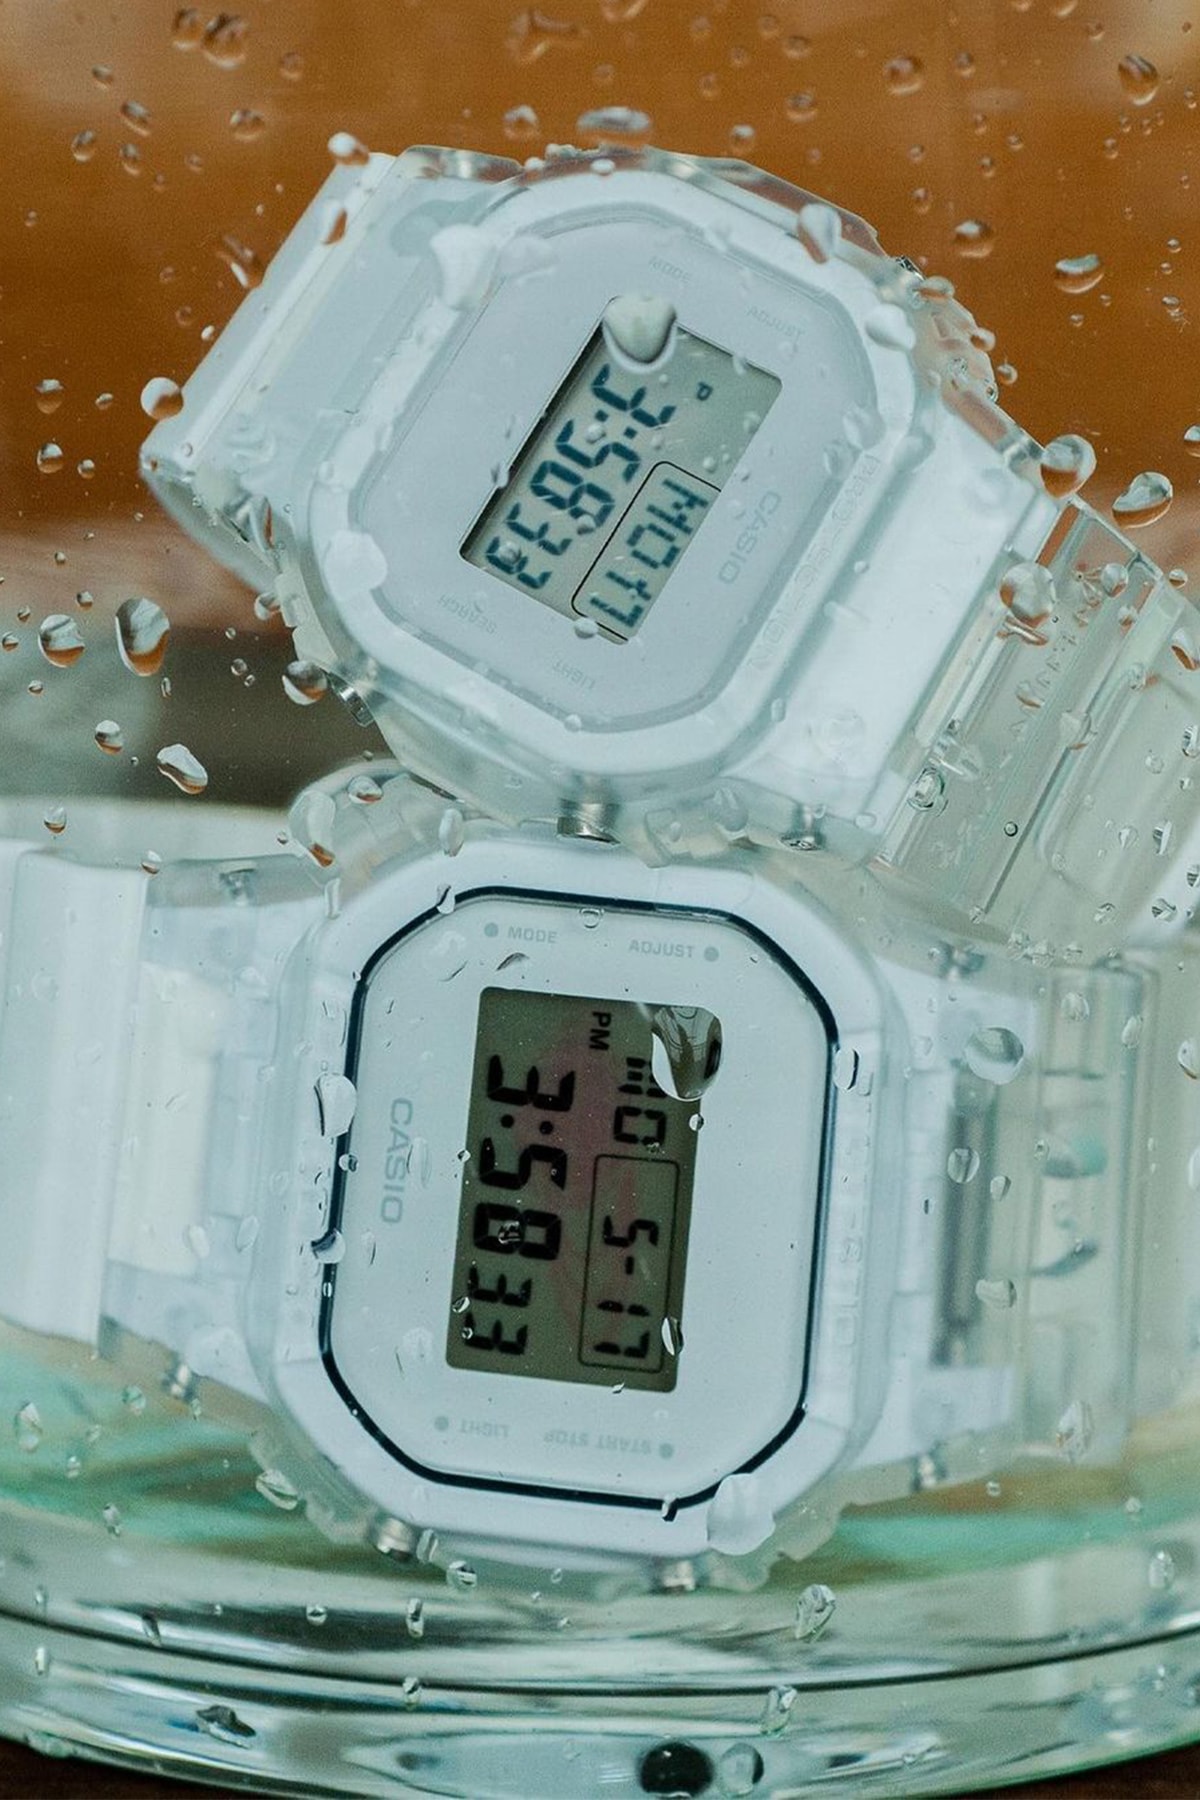 BEAMS x G-Shock 全新聯乘「Clear & White & Crazy」系列錶款發佈